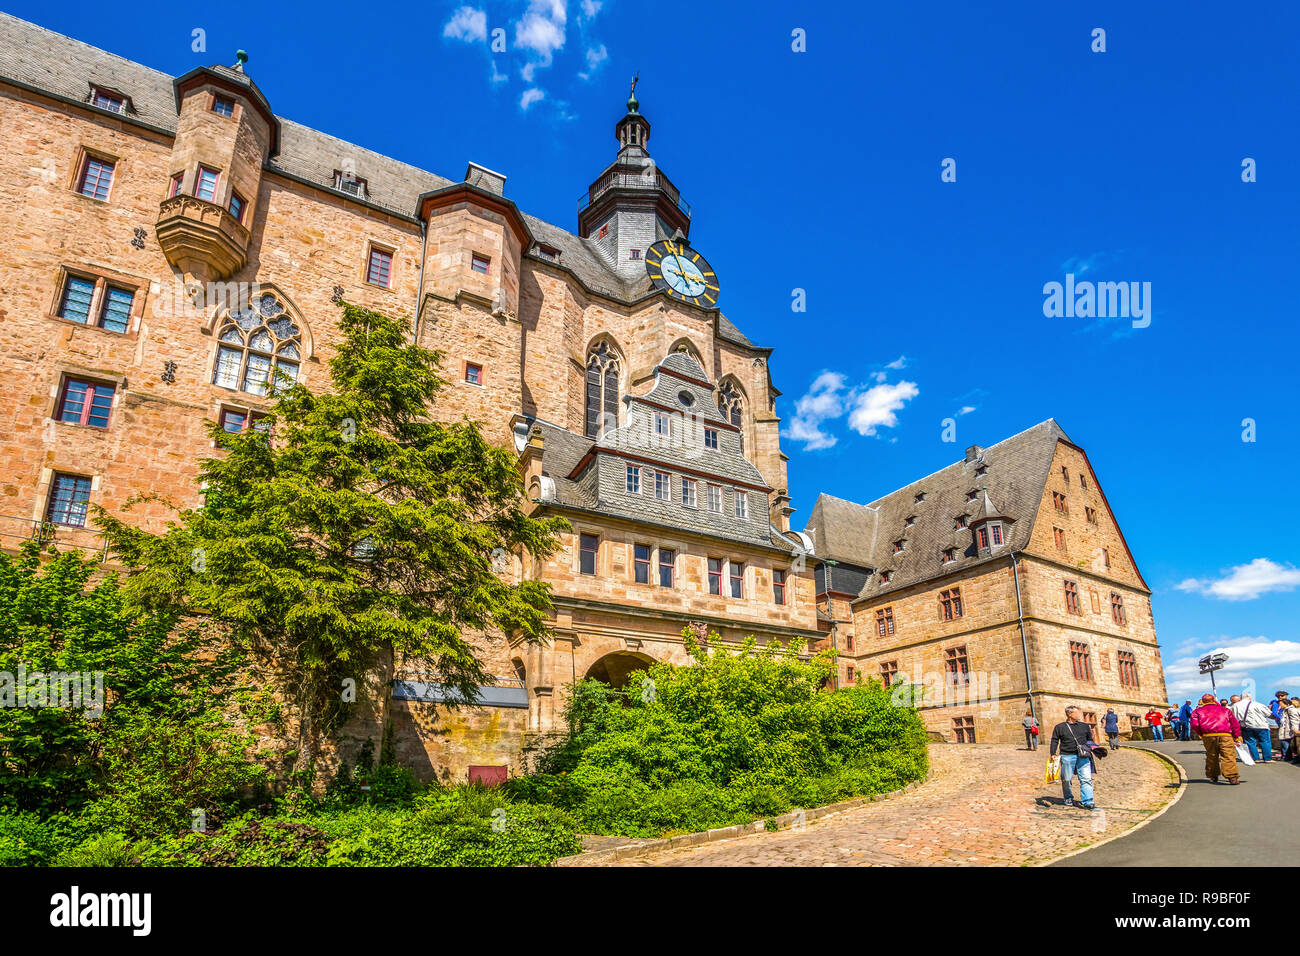 Castle, Marburg an der Lahn, Germany Stock Photo